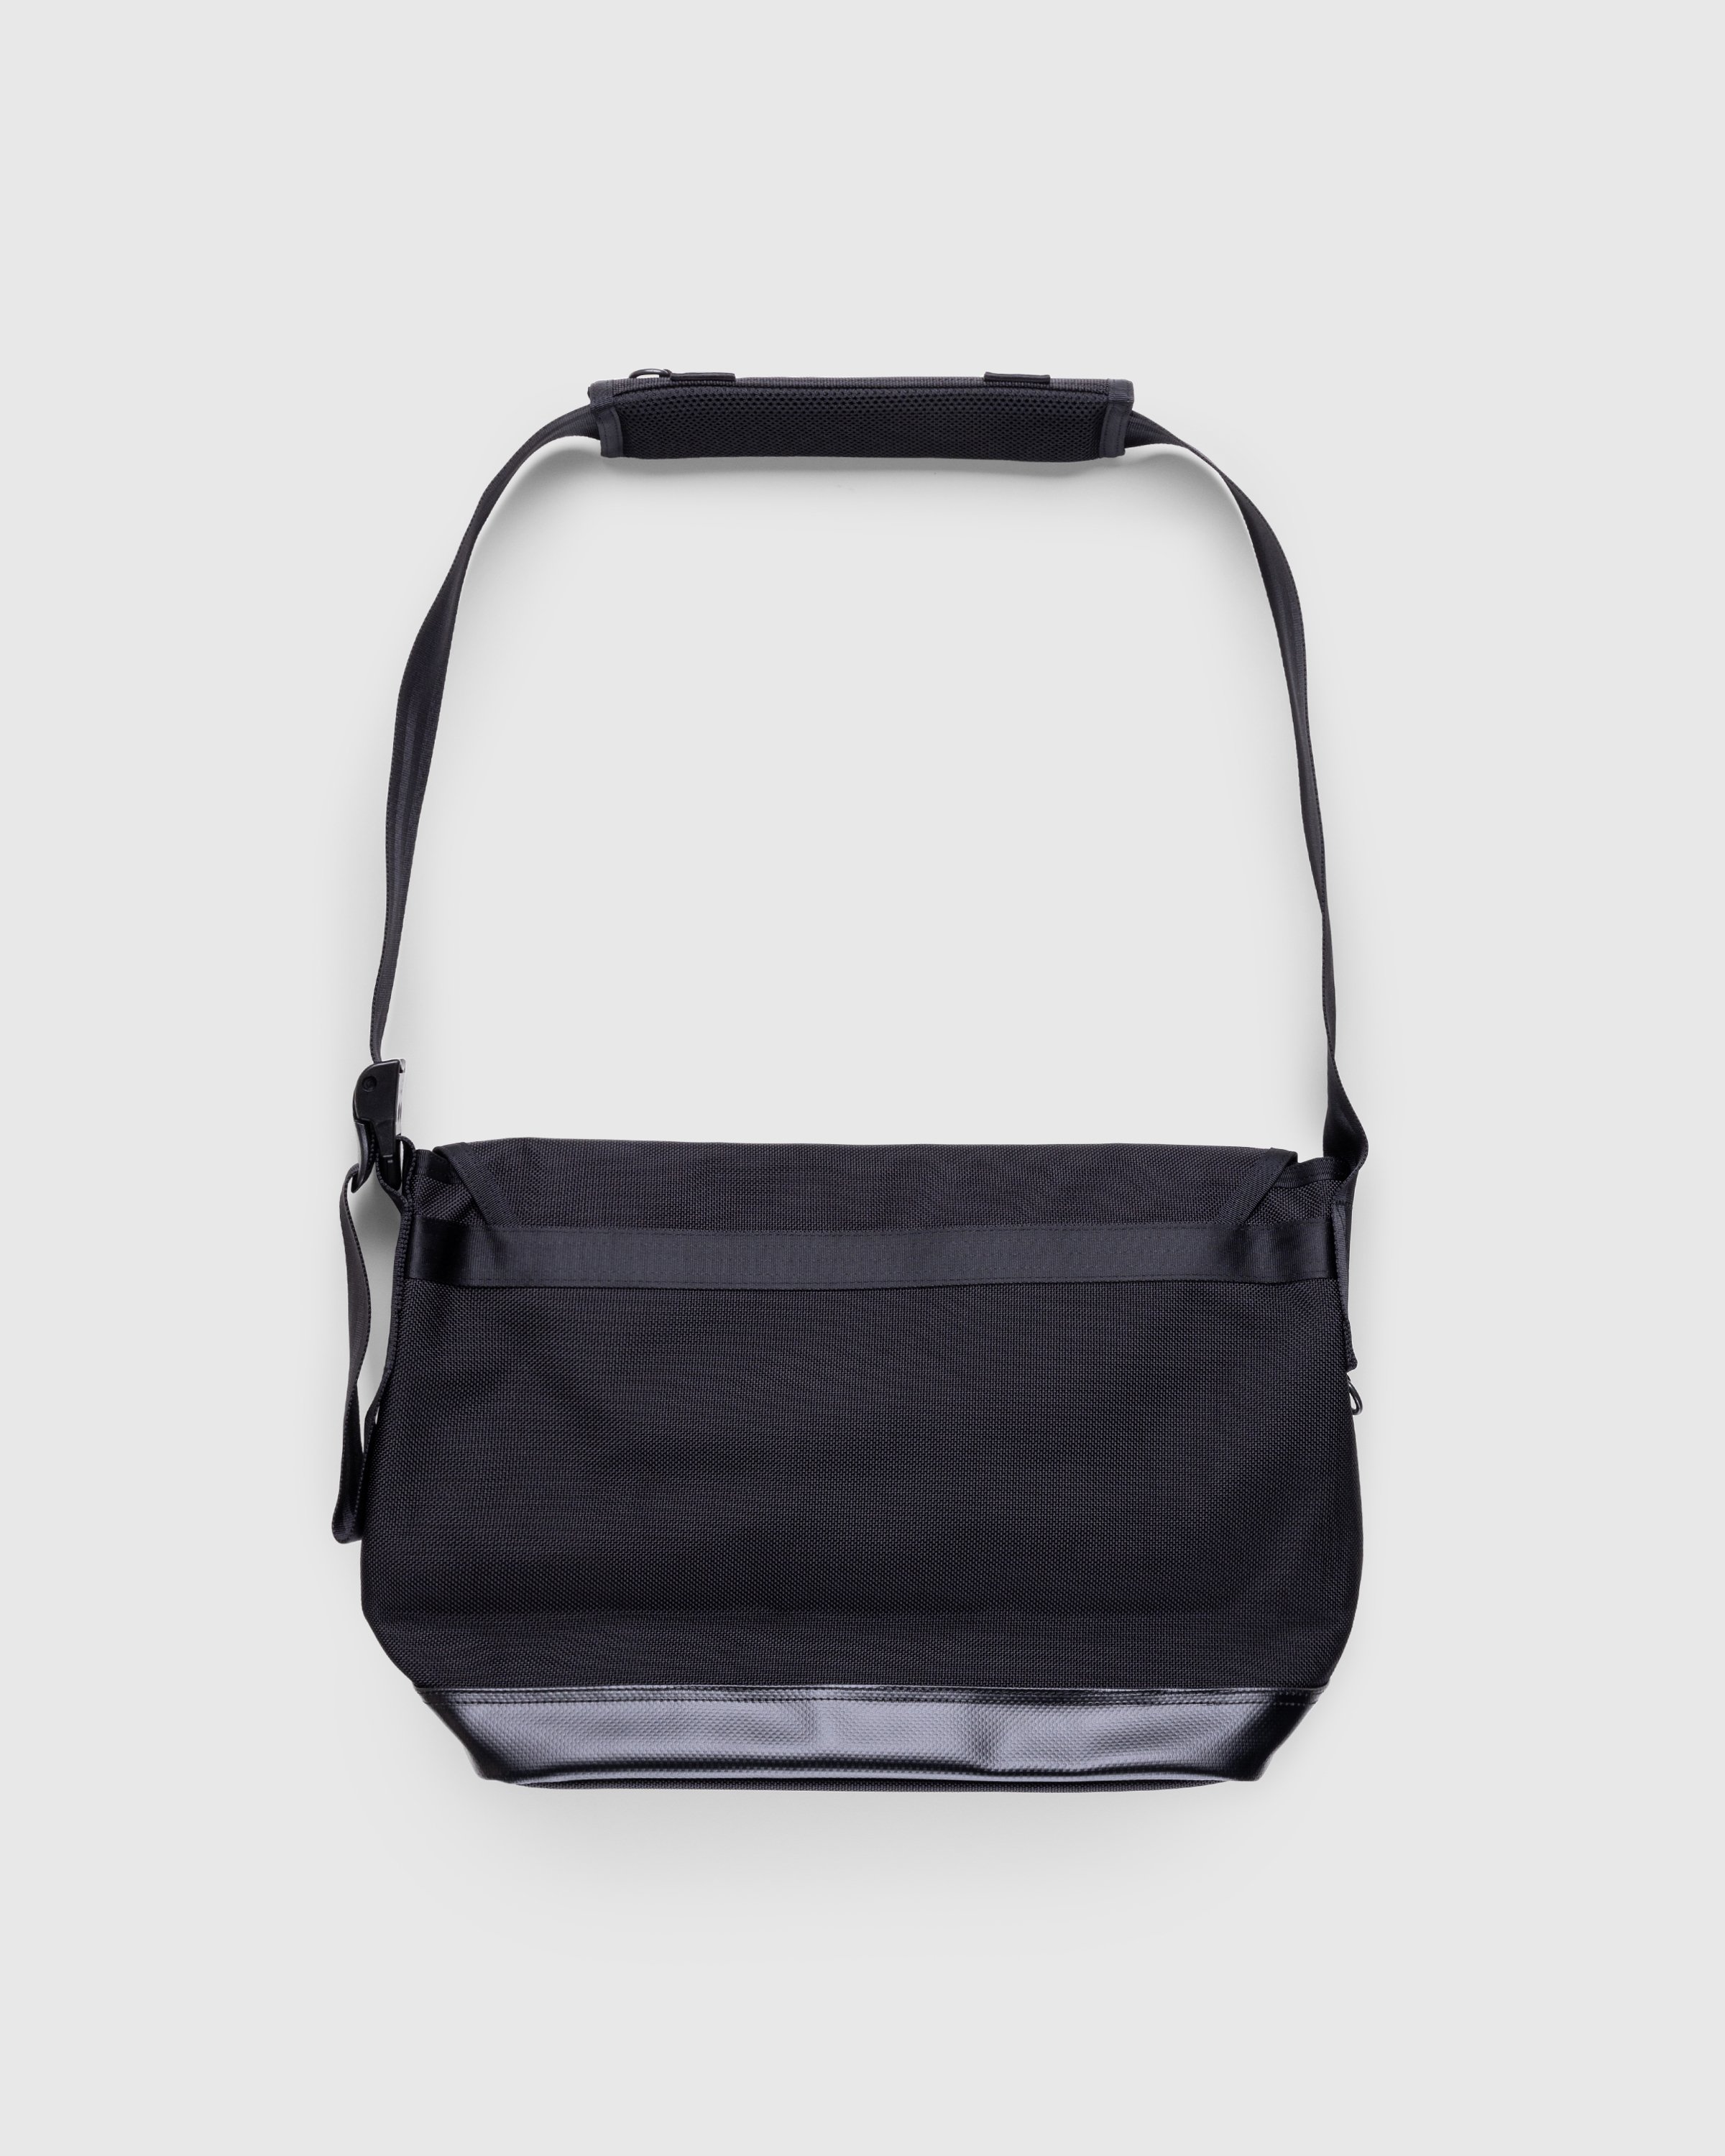 Porter-Yoshida & Co. - Heat Messenger Bag Black - Accessories - Black - Image 2